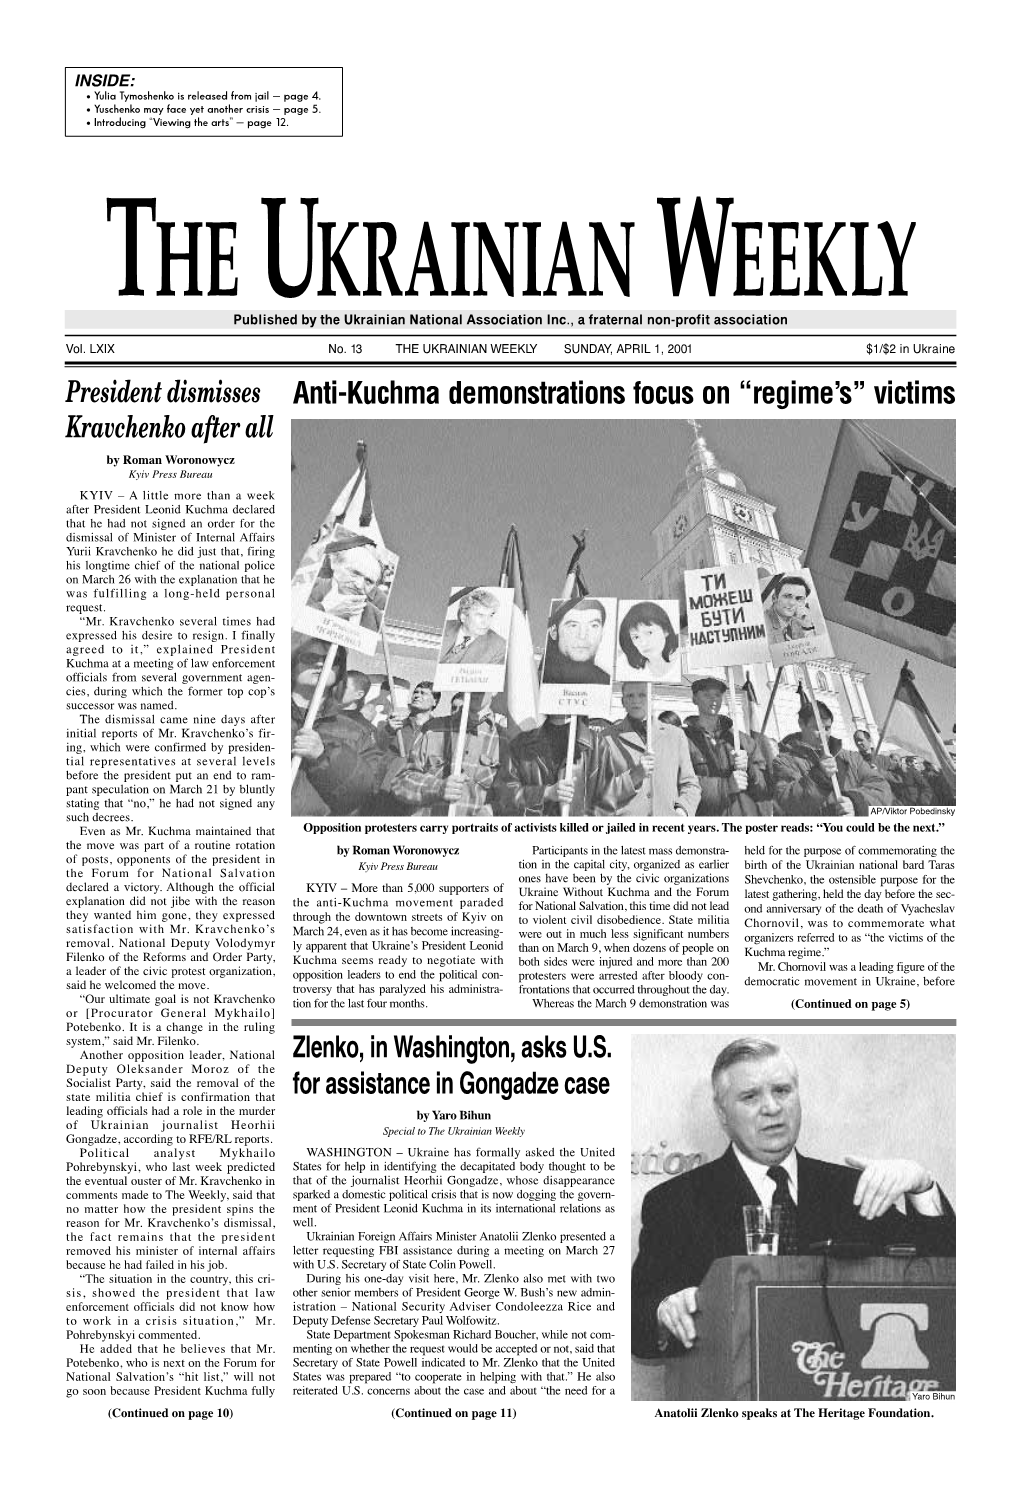 The Ukrainian Weekly 2001, No.13